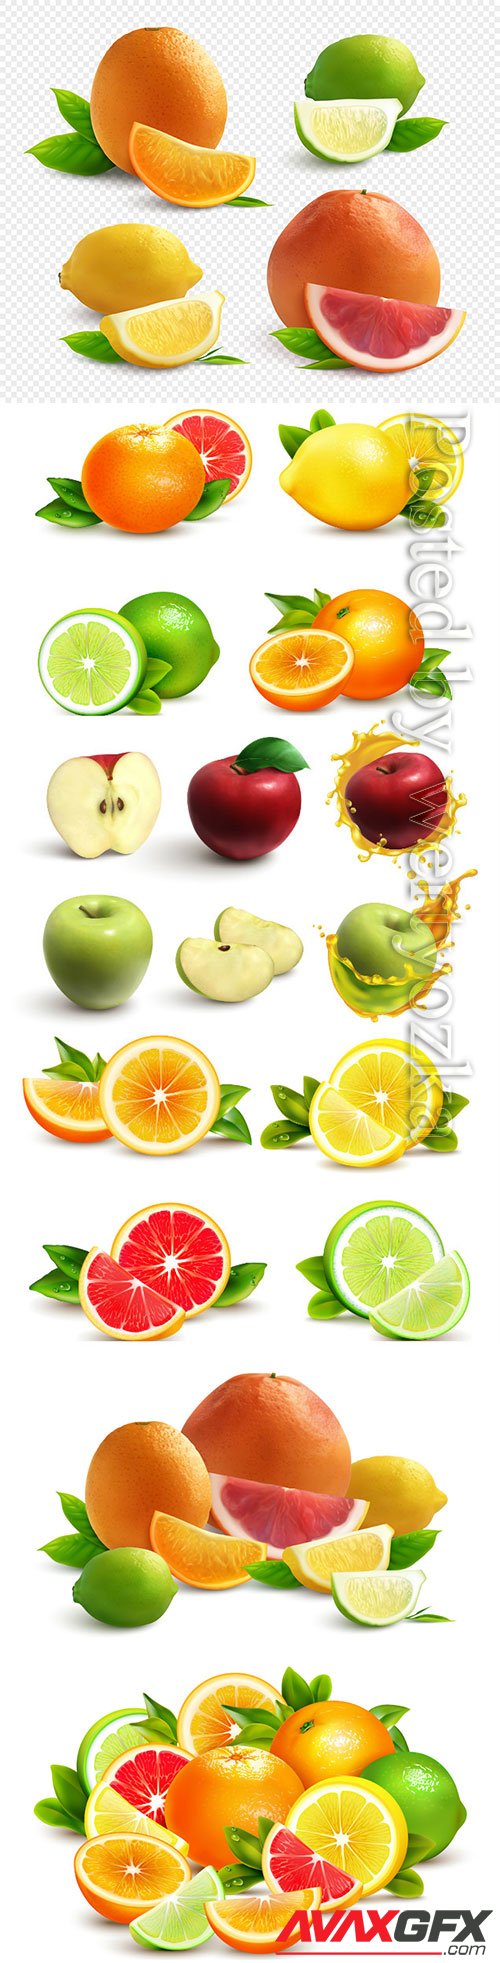 Citrus fruits vector illustration